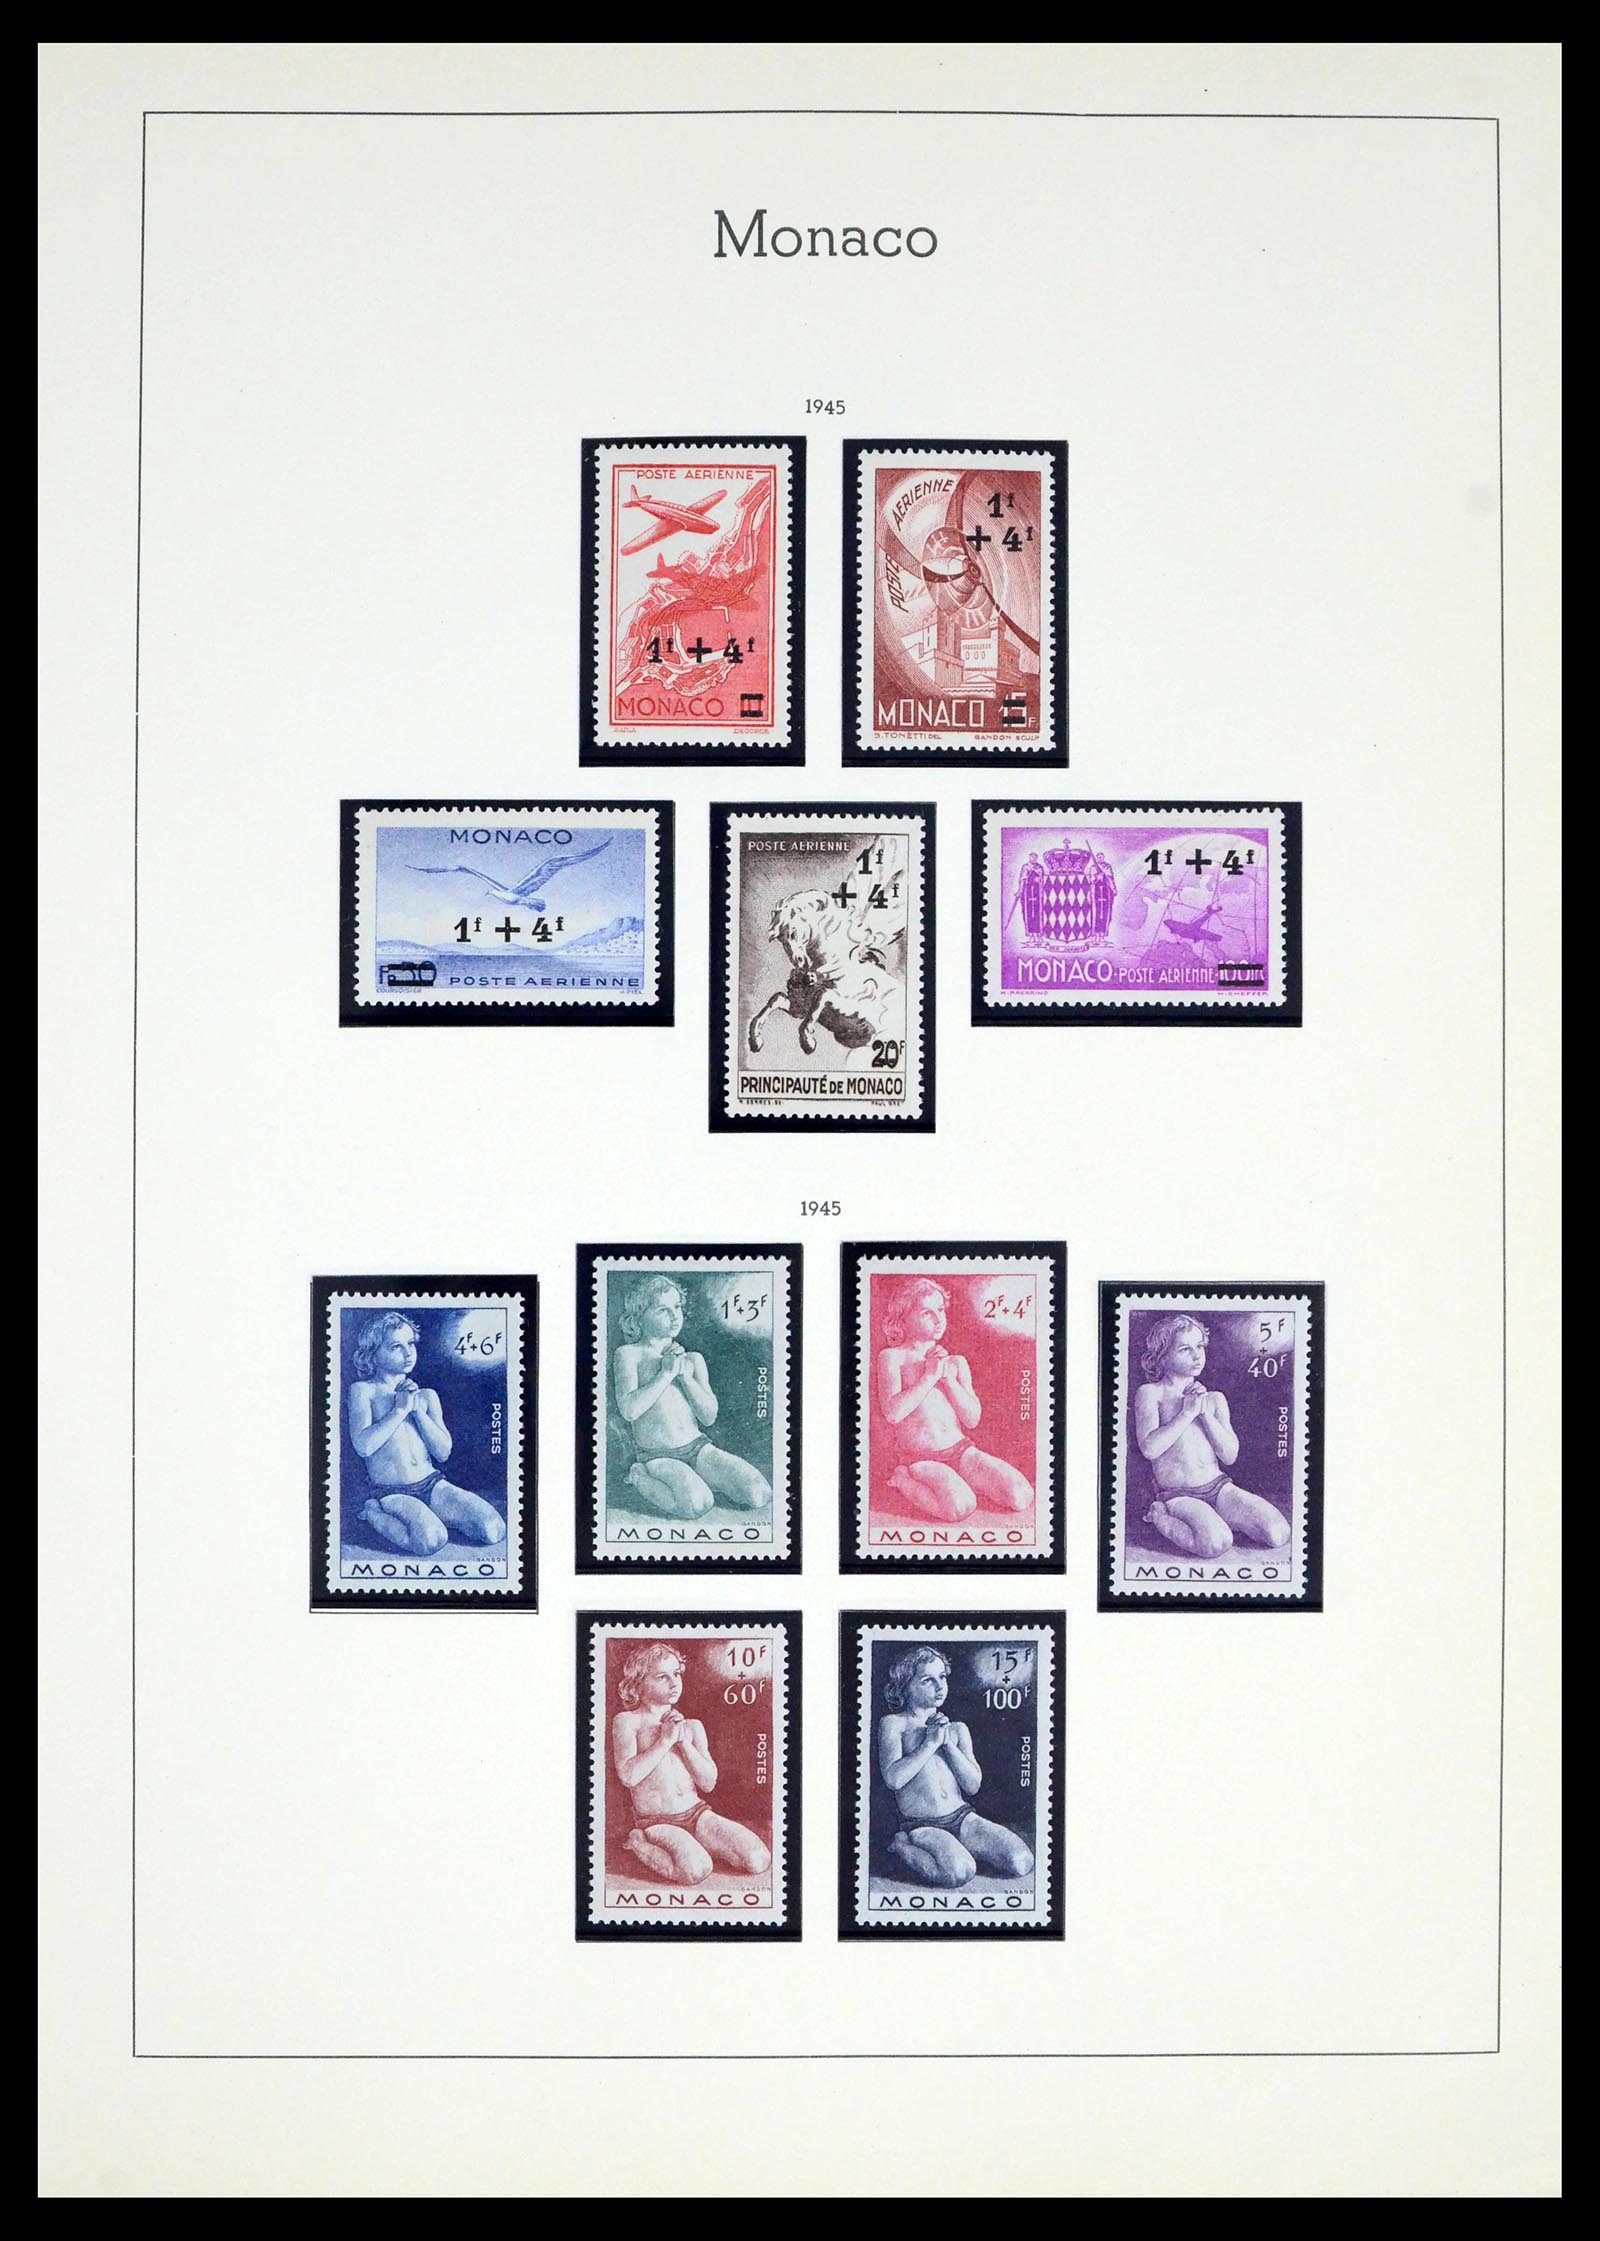 39392 0023 - Stamp collection 39392 Monaco 1885-1999.